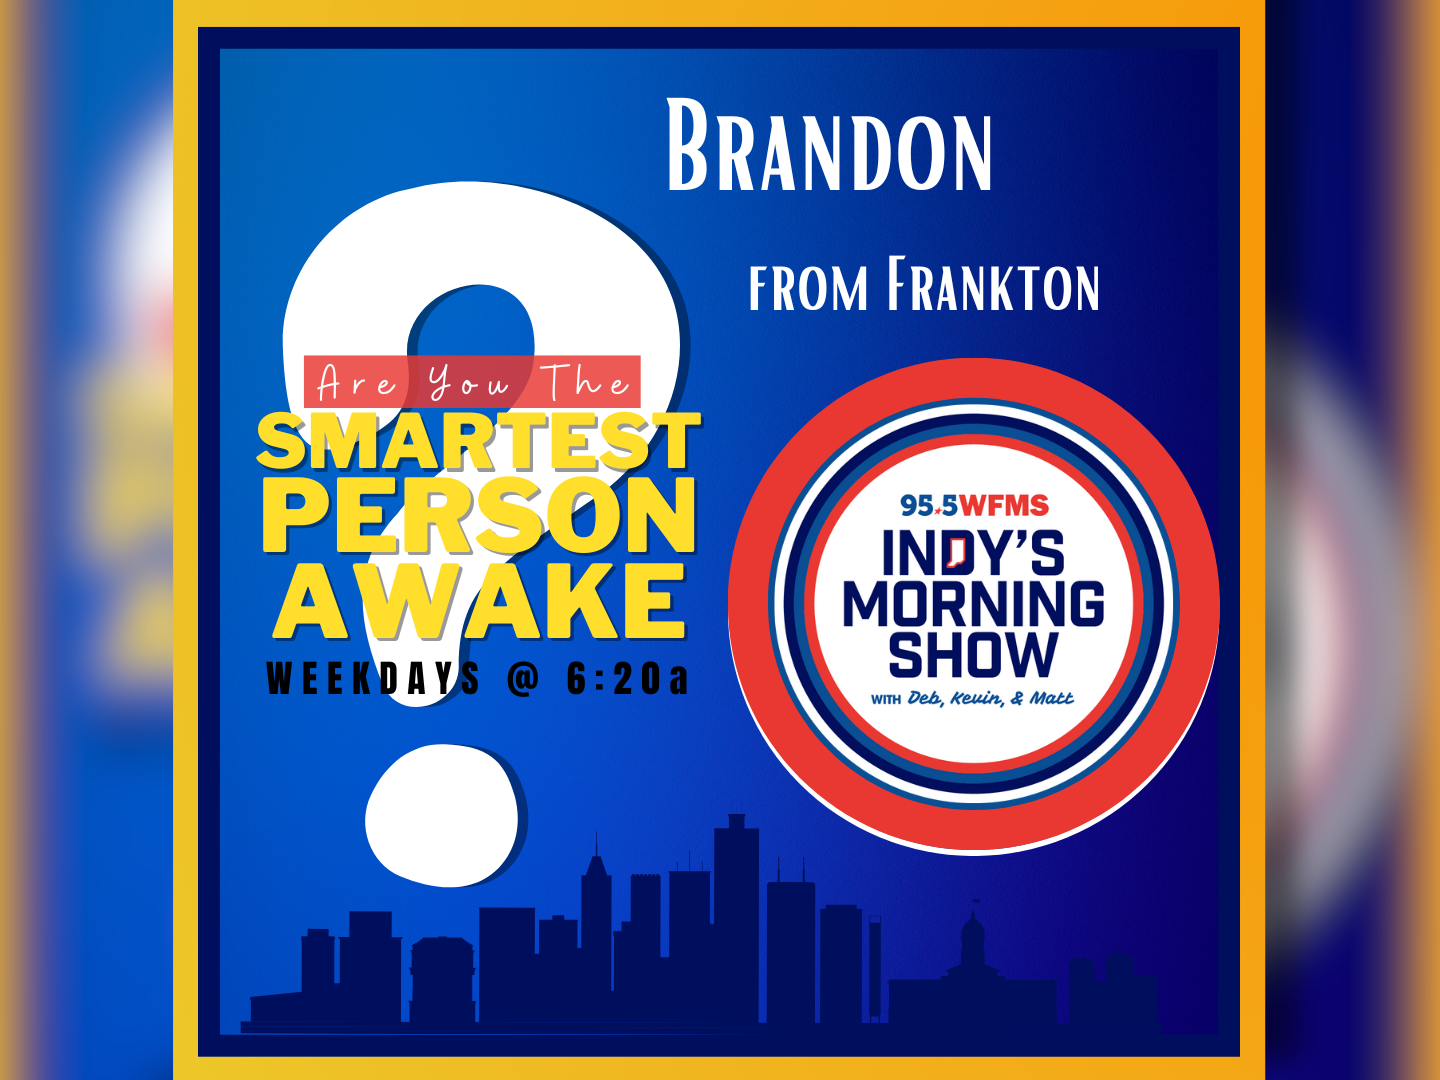 Brandon From Frankton Was The Smartest Person Awake …